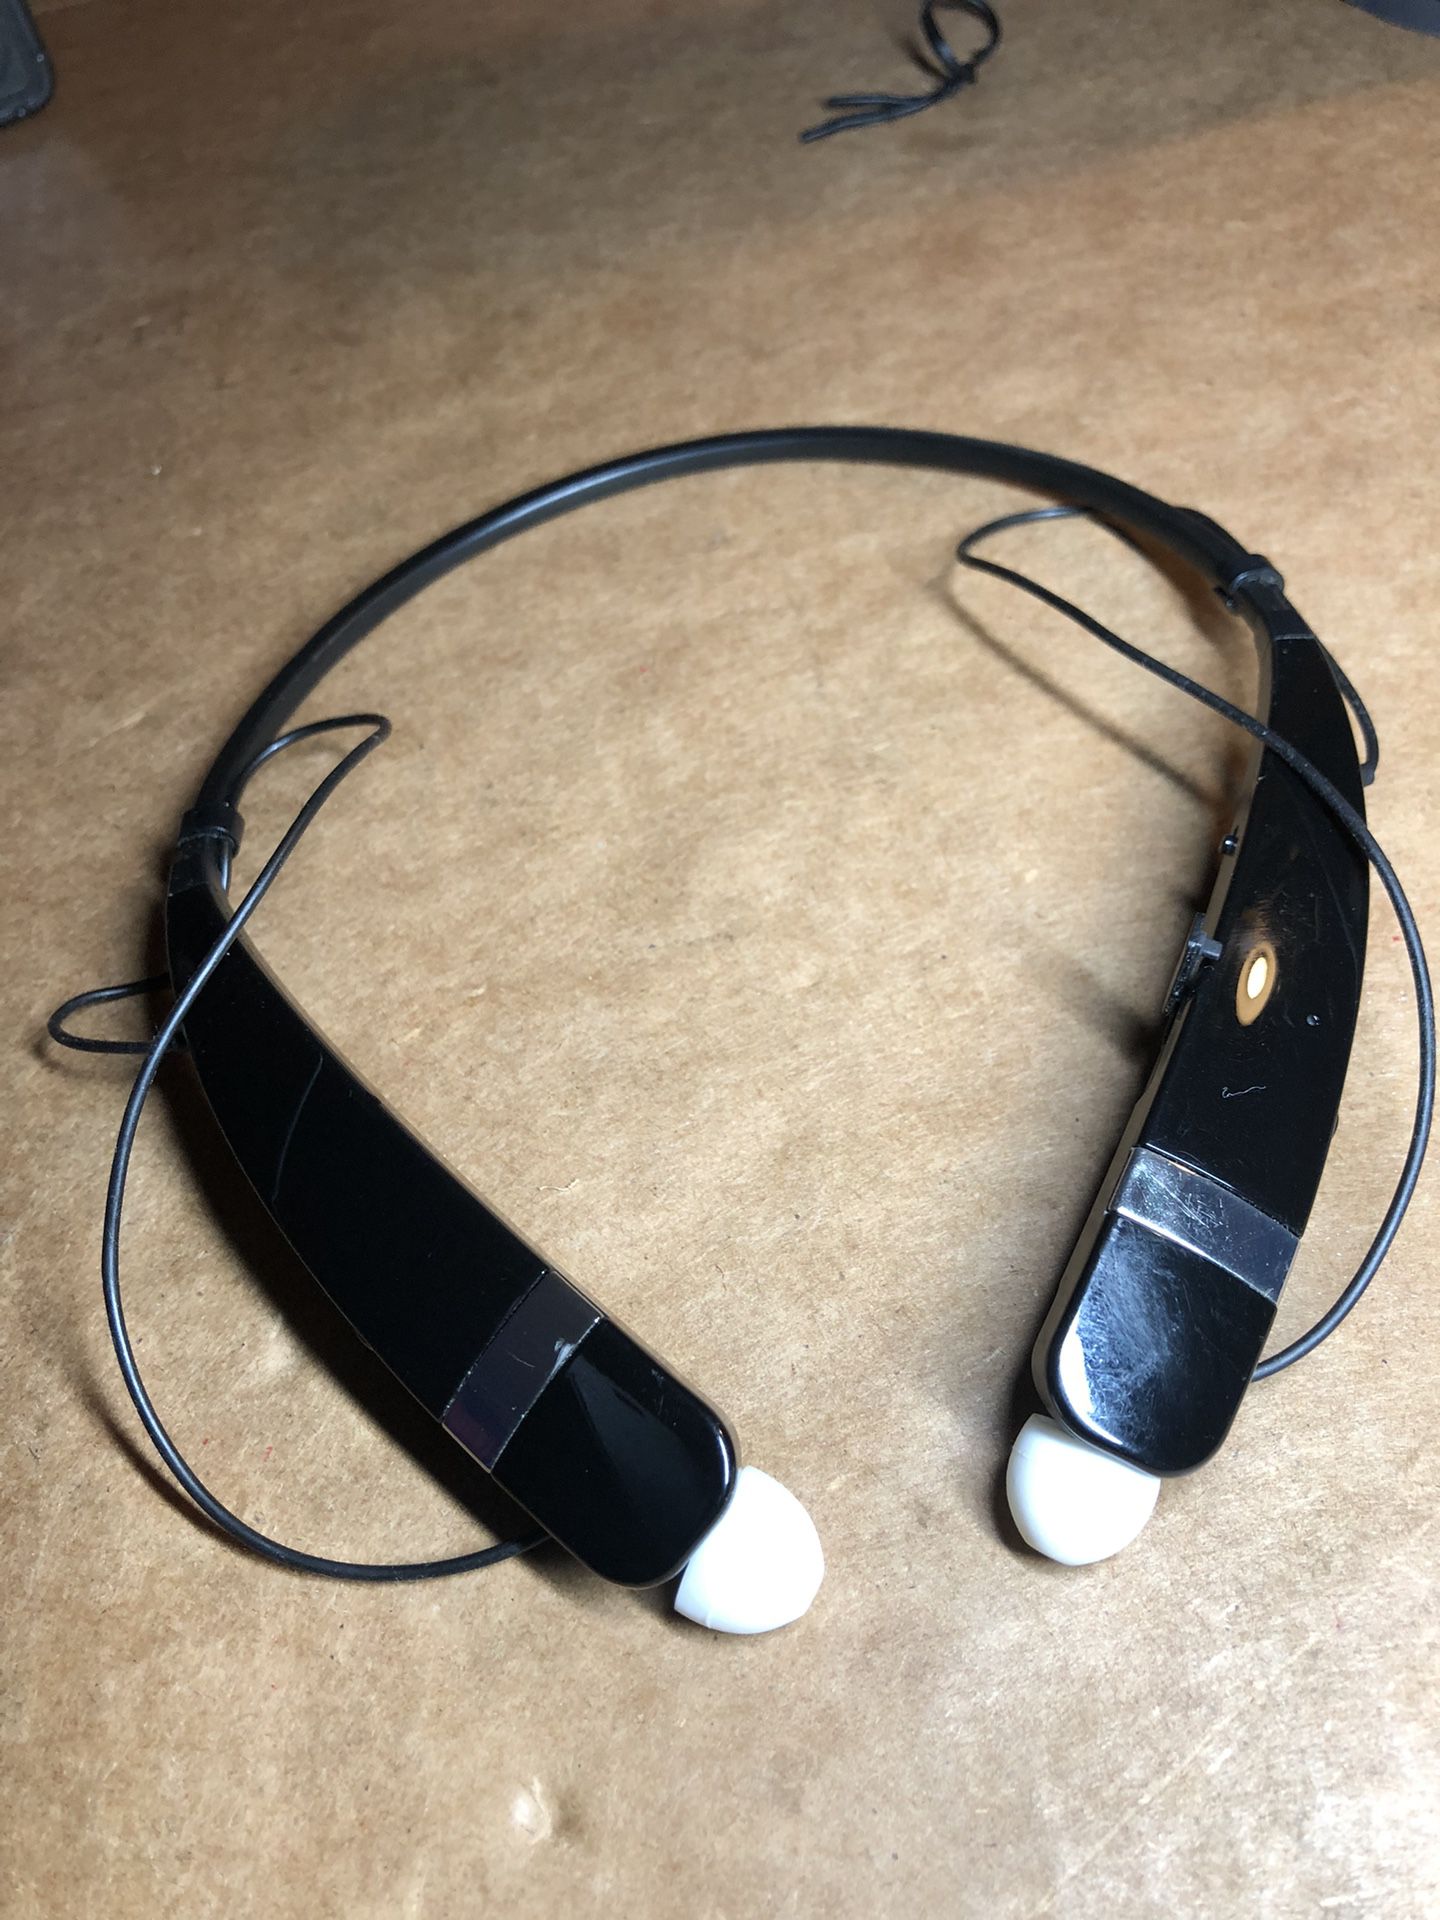 LG Stereo Headset Bluetooth 